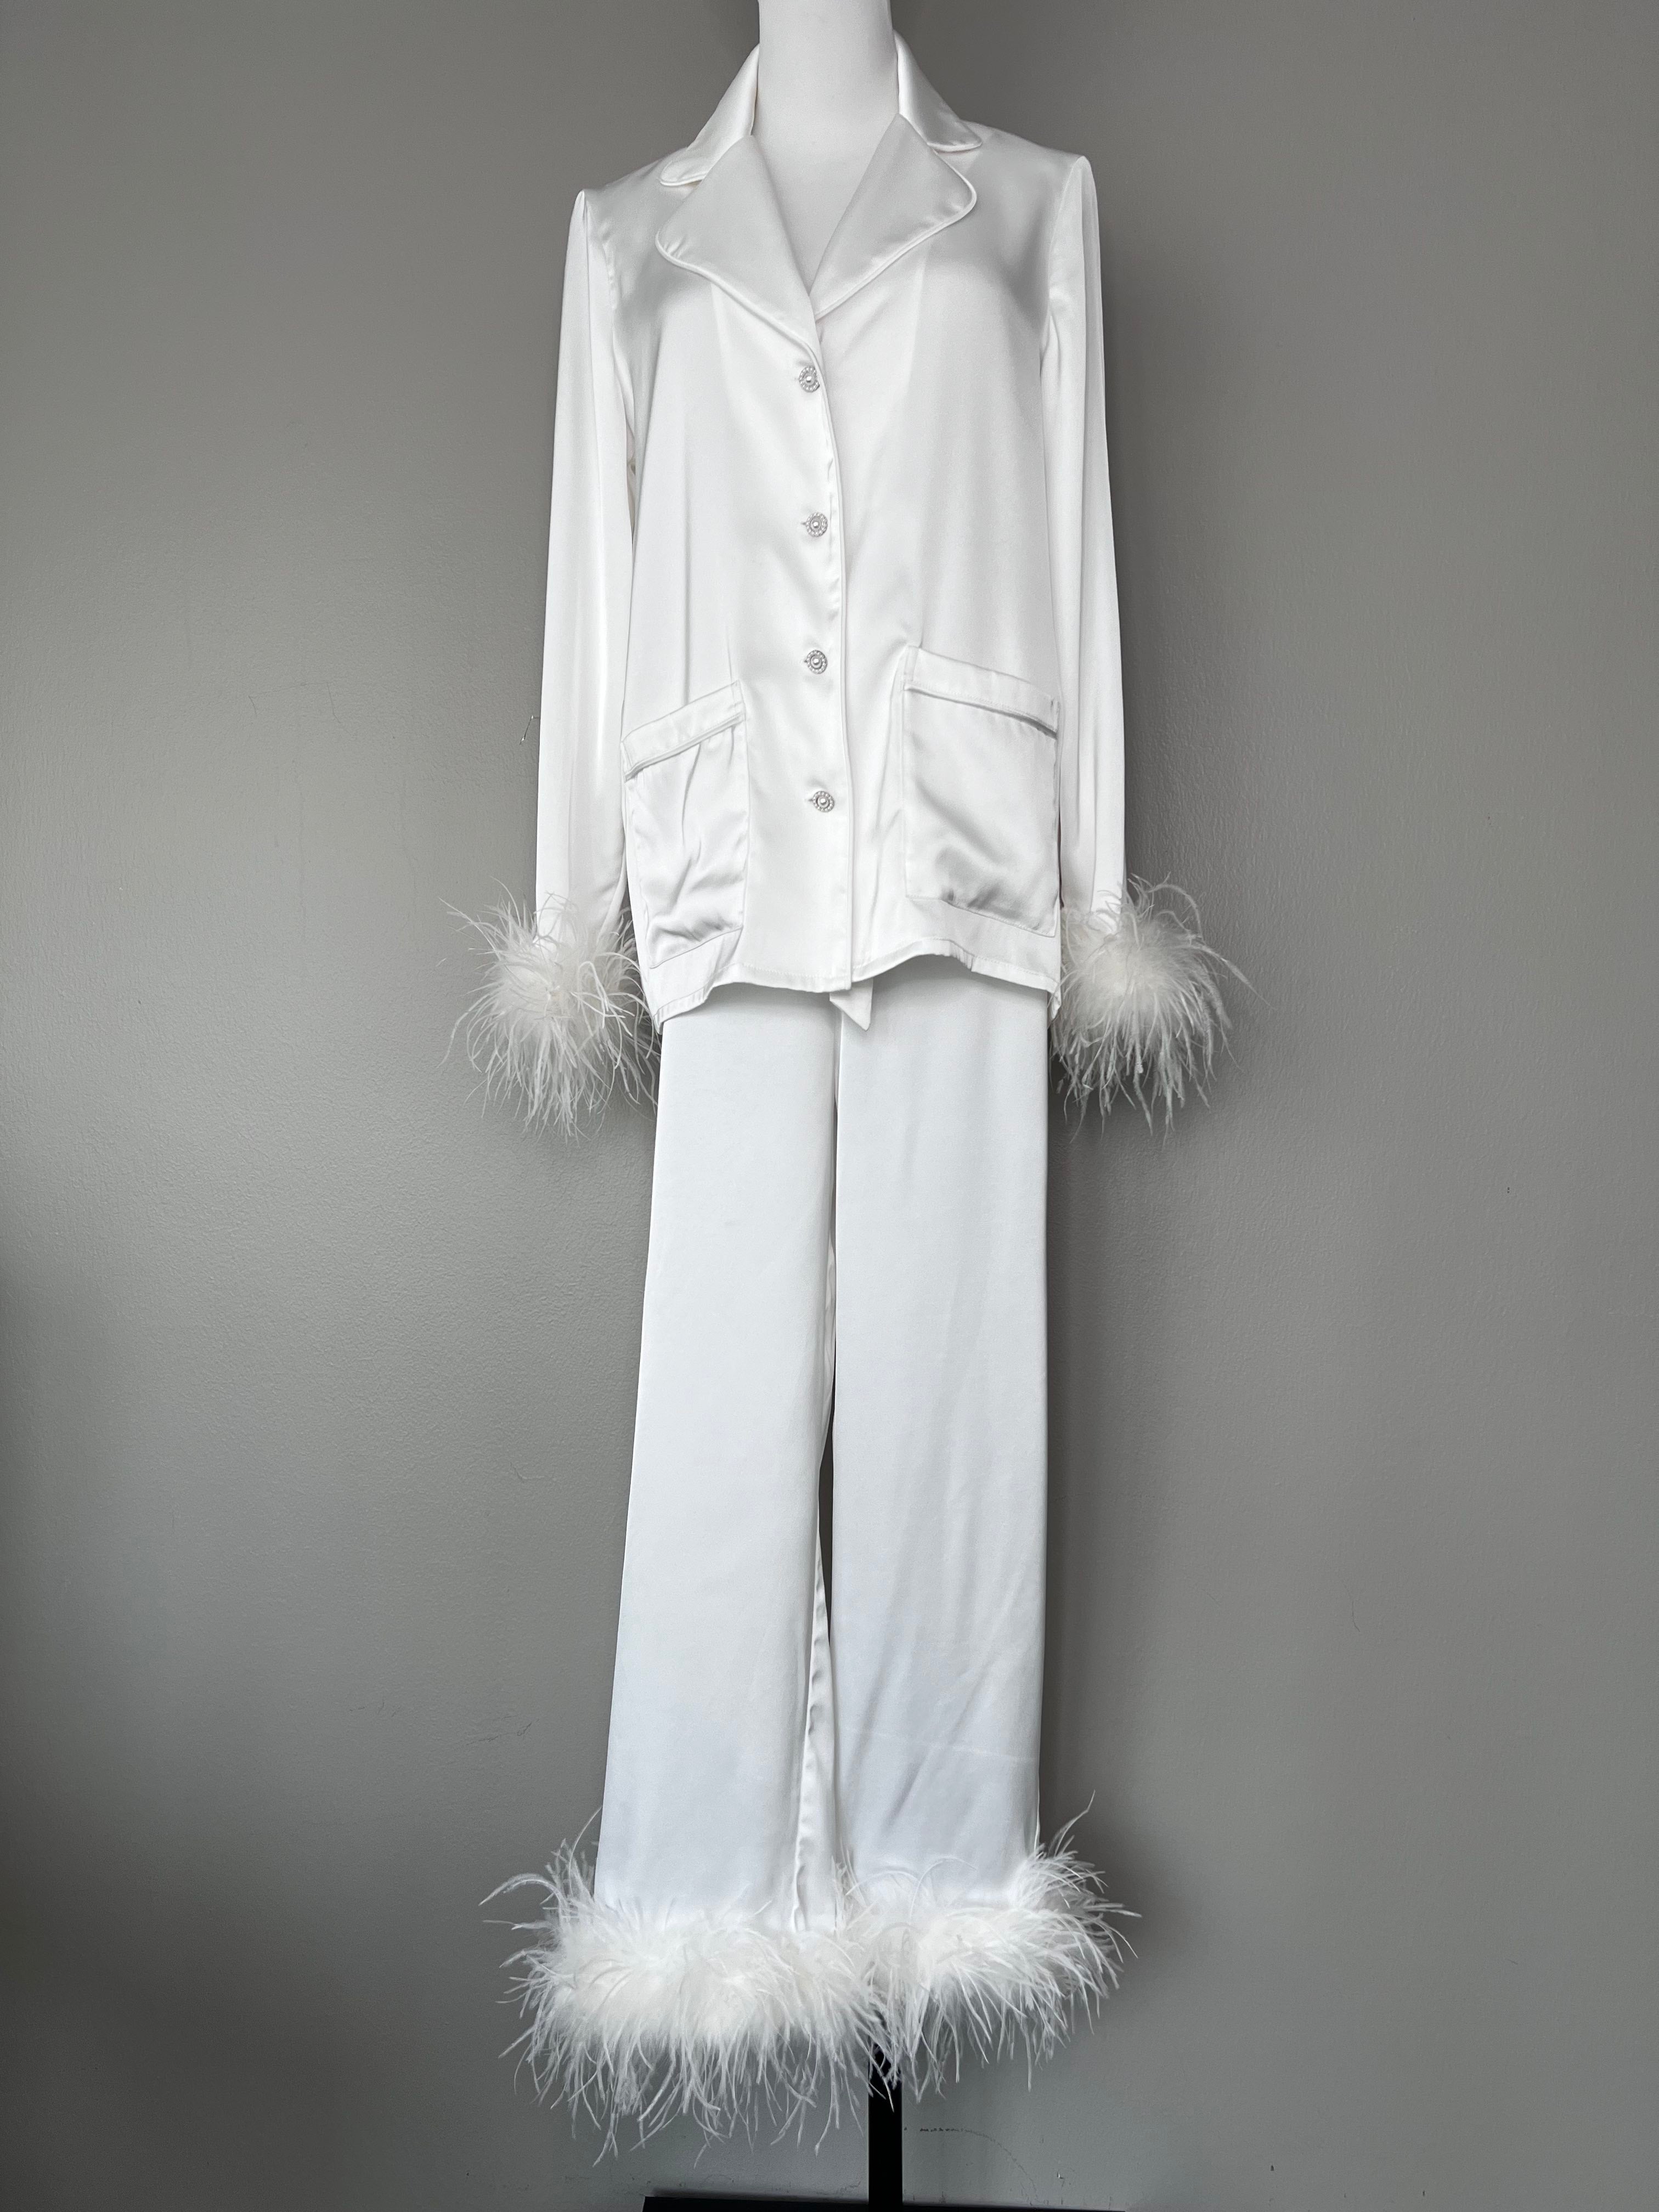 Merabi darice white silky Pyjama set - Nadine Merabi